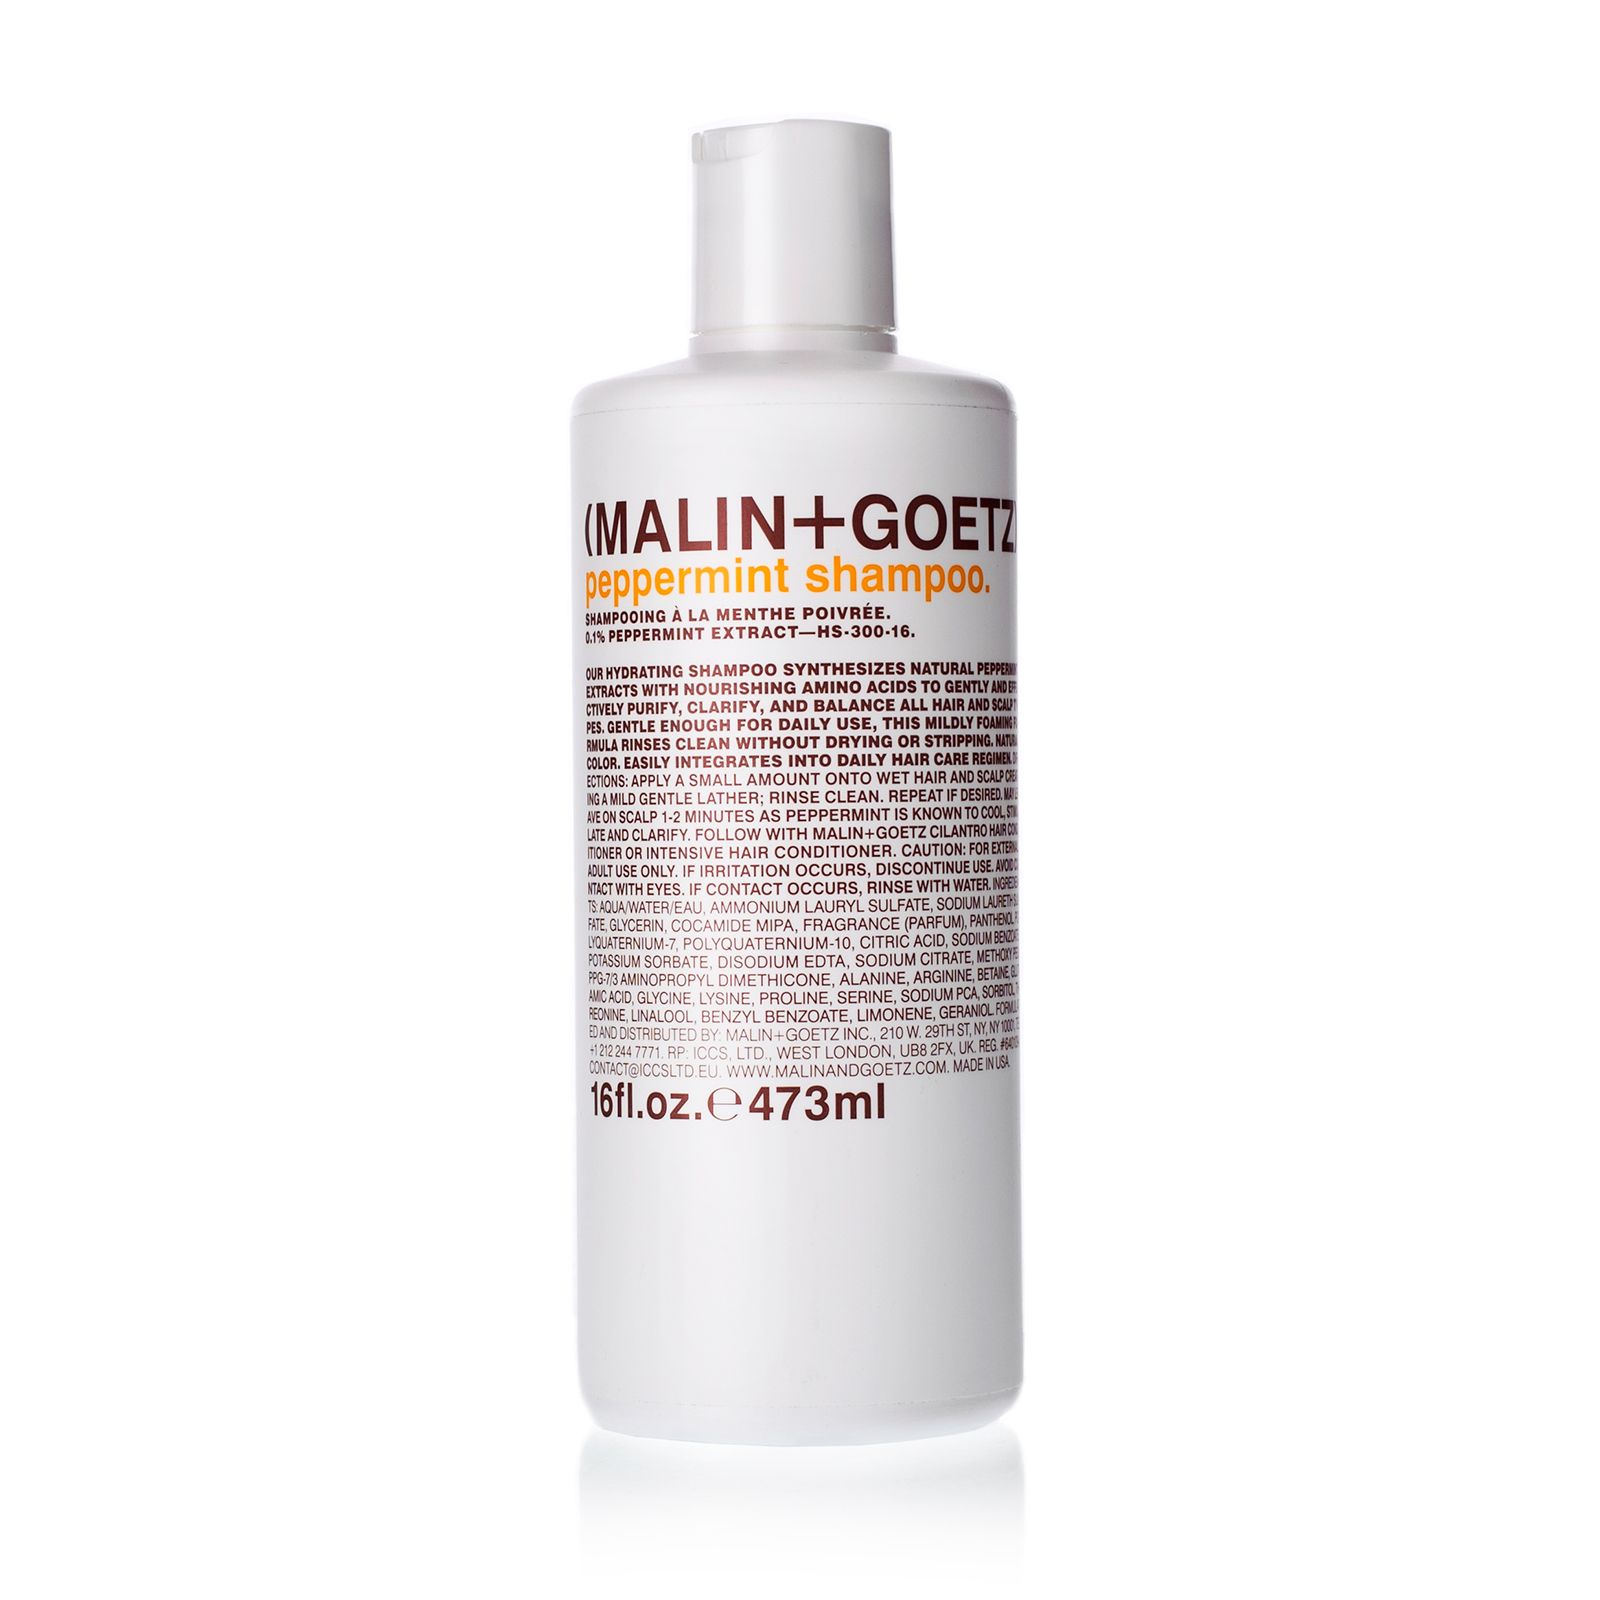 MALIN+GOETZ Peppermint Shampoo 473 ml.